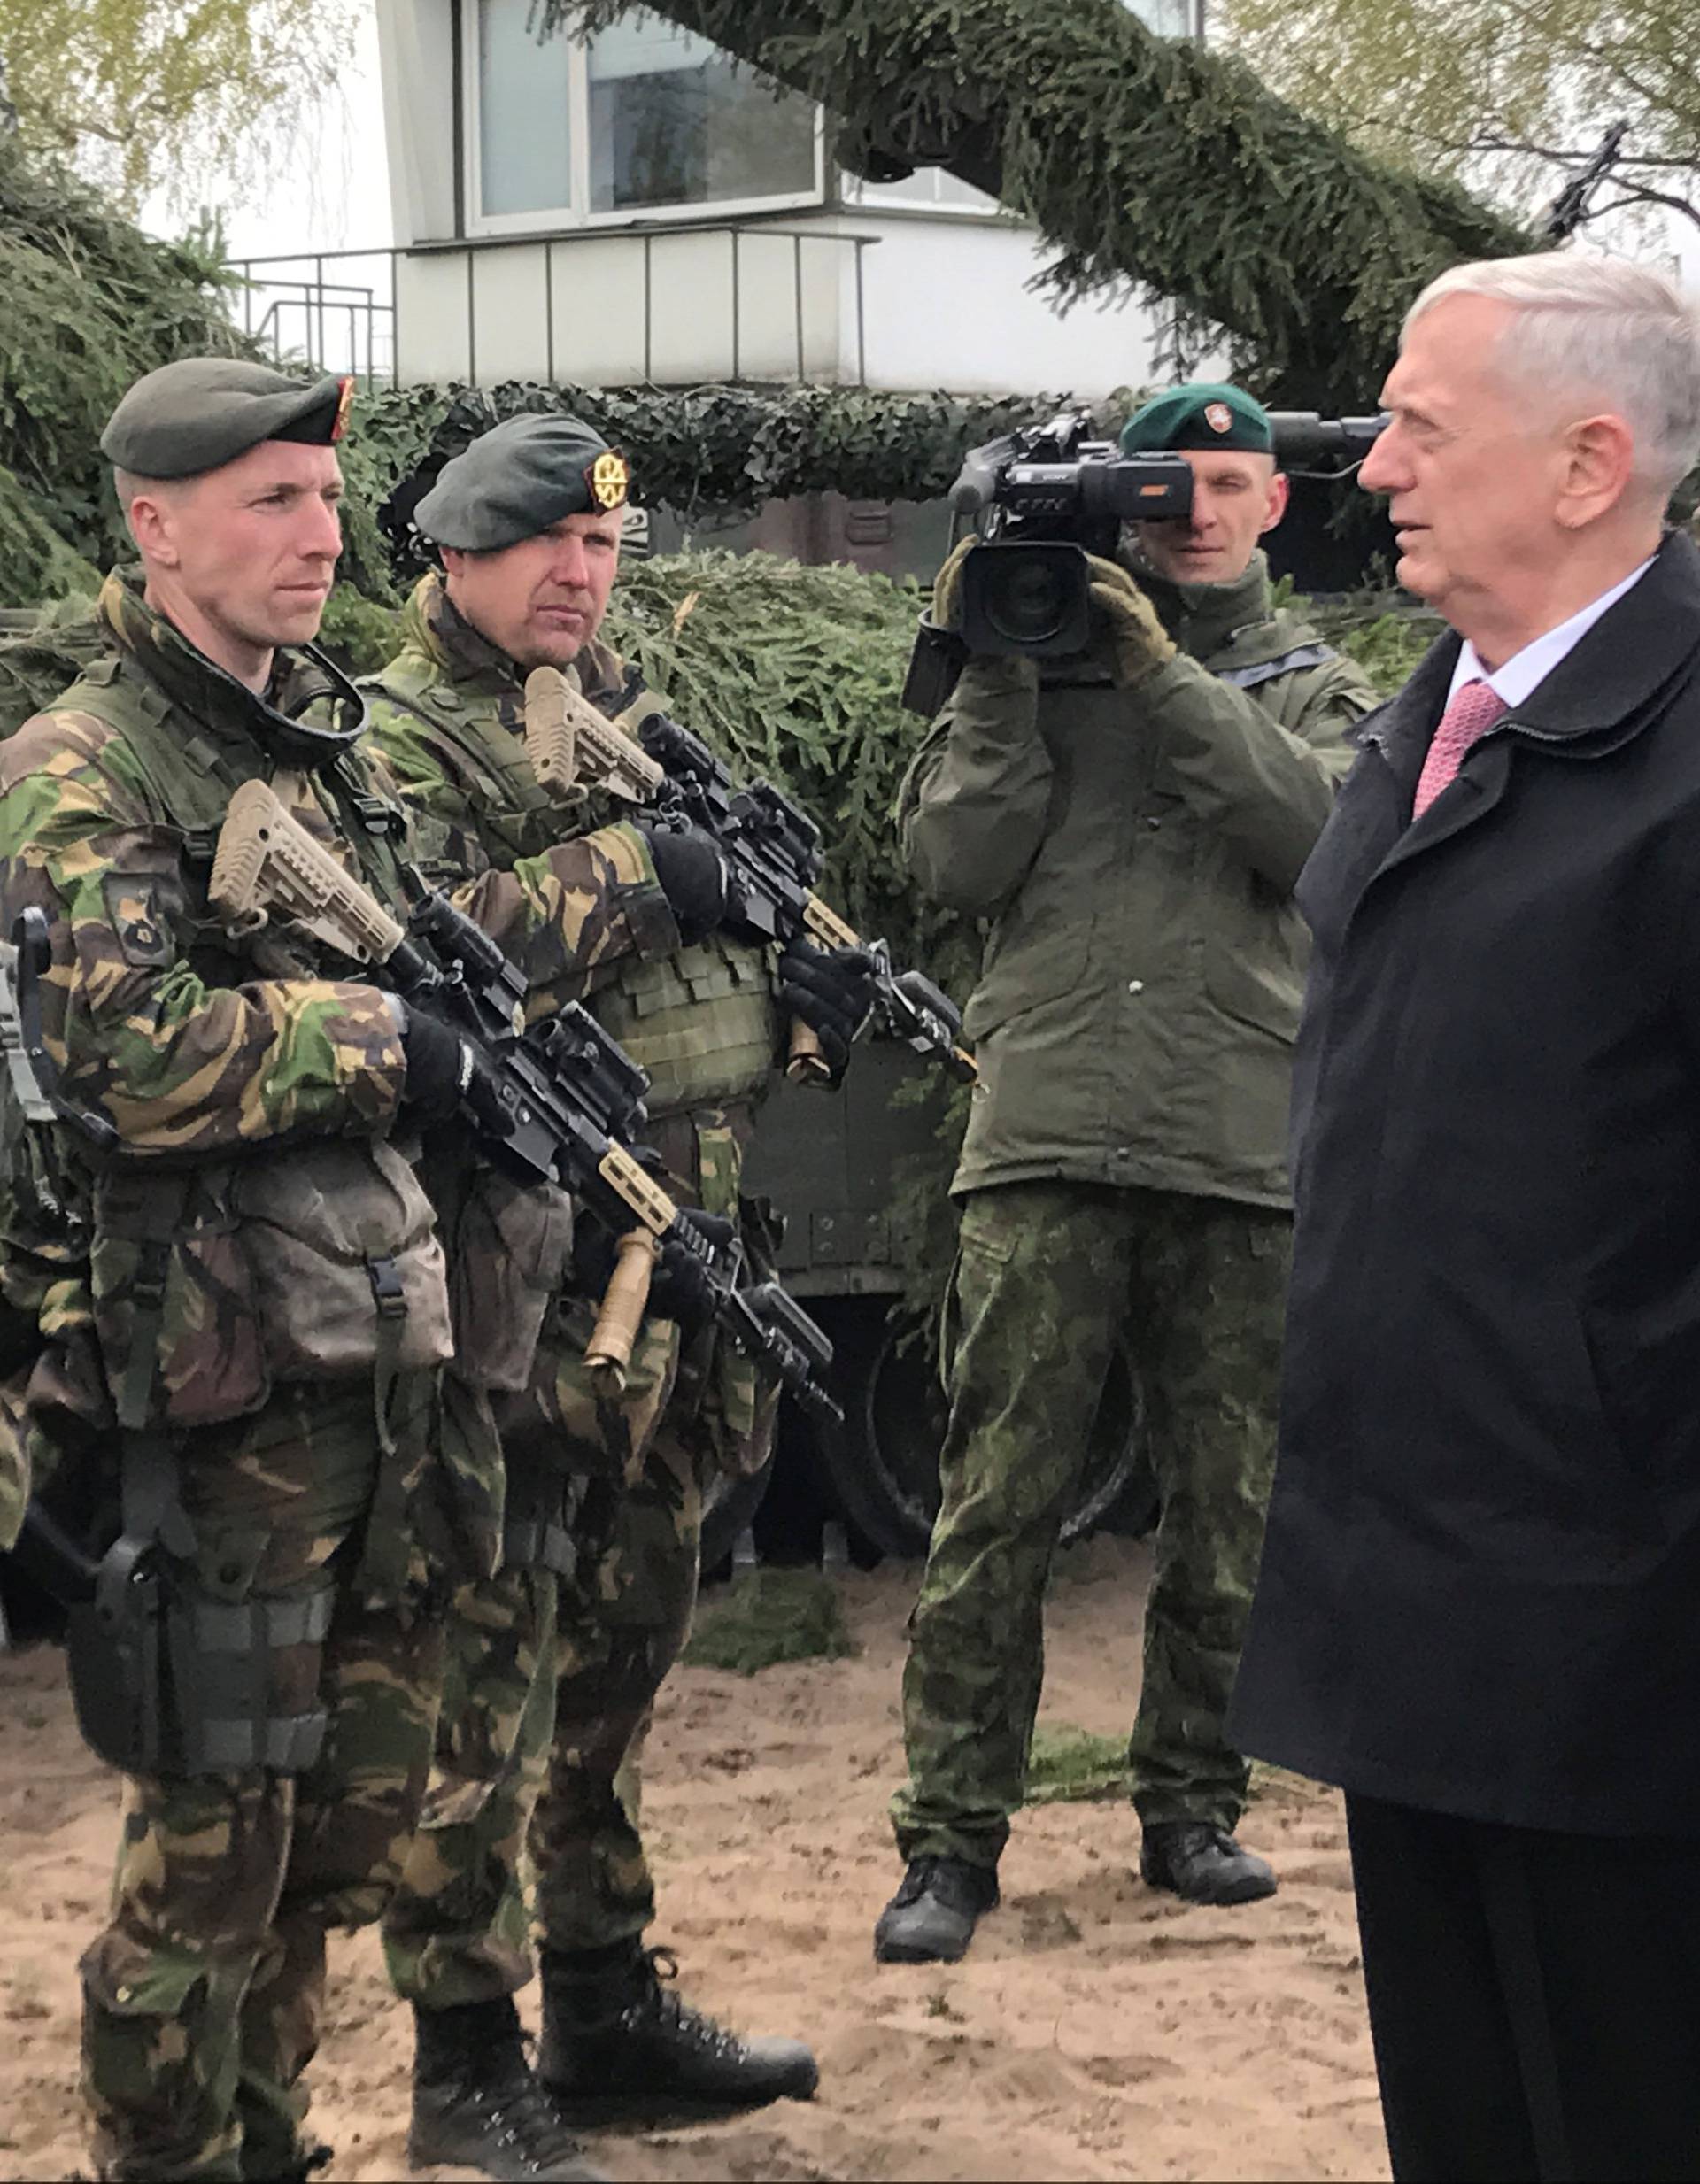 United States Defense Secretary Jim Mattis (R) tours Pabrade military training area in Lithuania